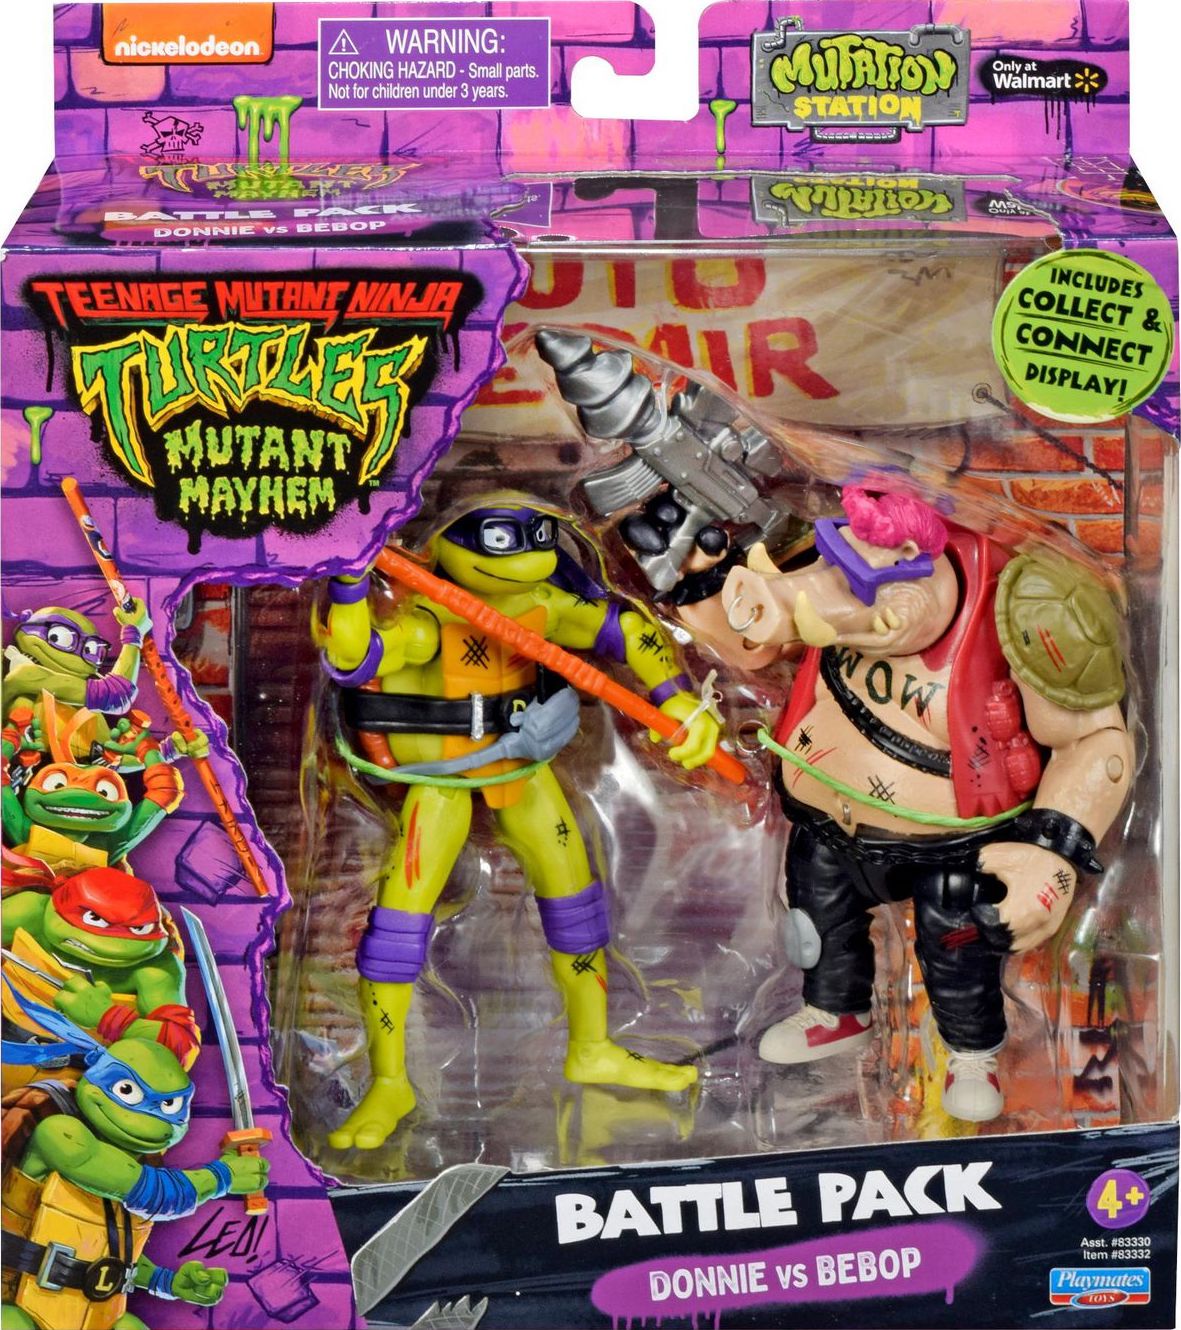 https://www.actionfigure411.com/teenage-mutant-ninja-turtles/images/donnie-vs-bepop-battle-pack-7077.jpg